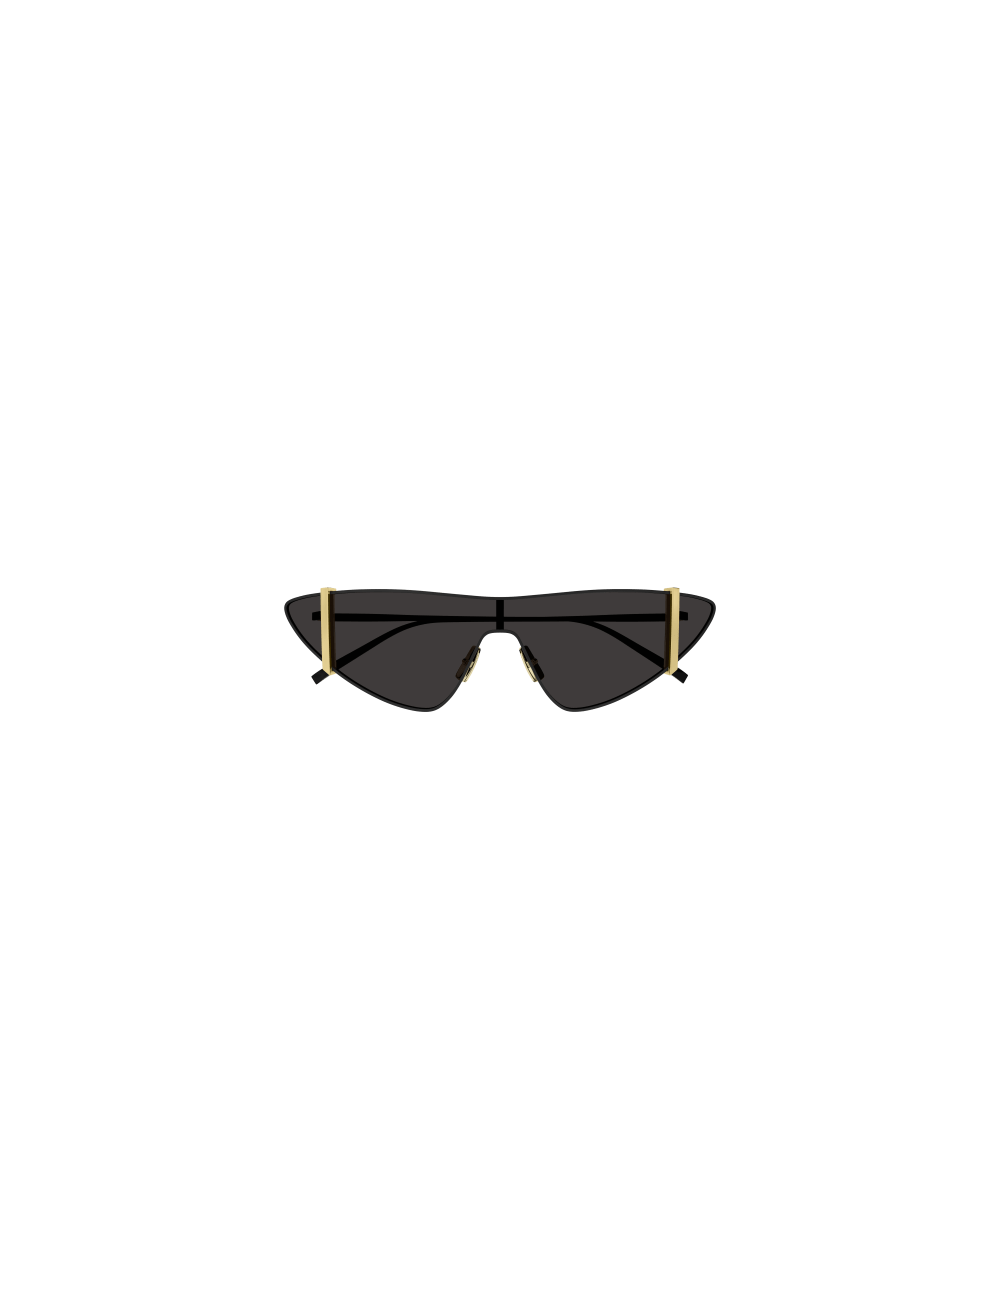 Sl 536 Laurent Saint sunglasses